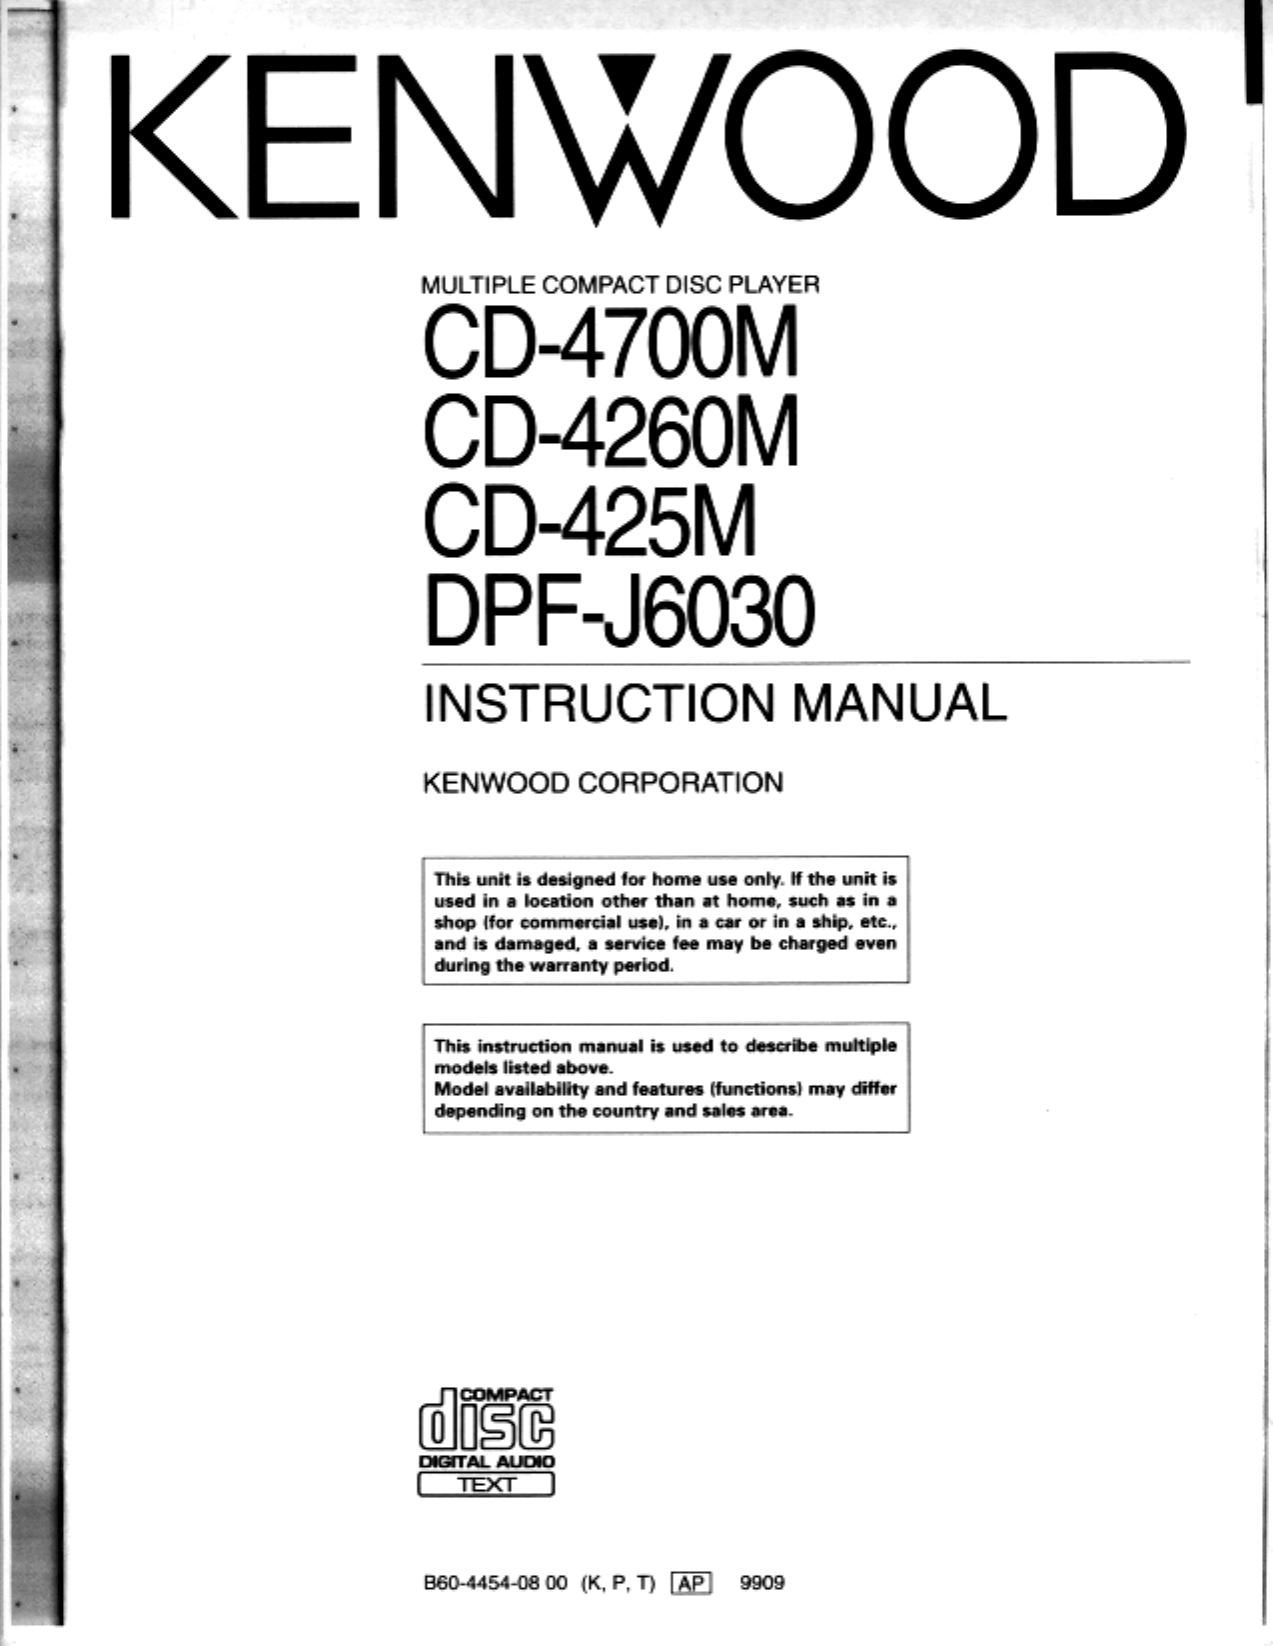 Kenwood CD 425 M Owners Manual